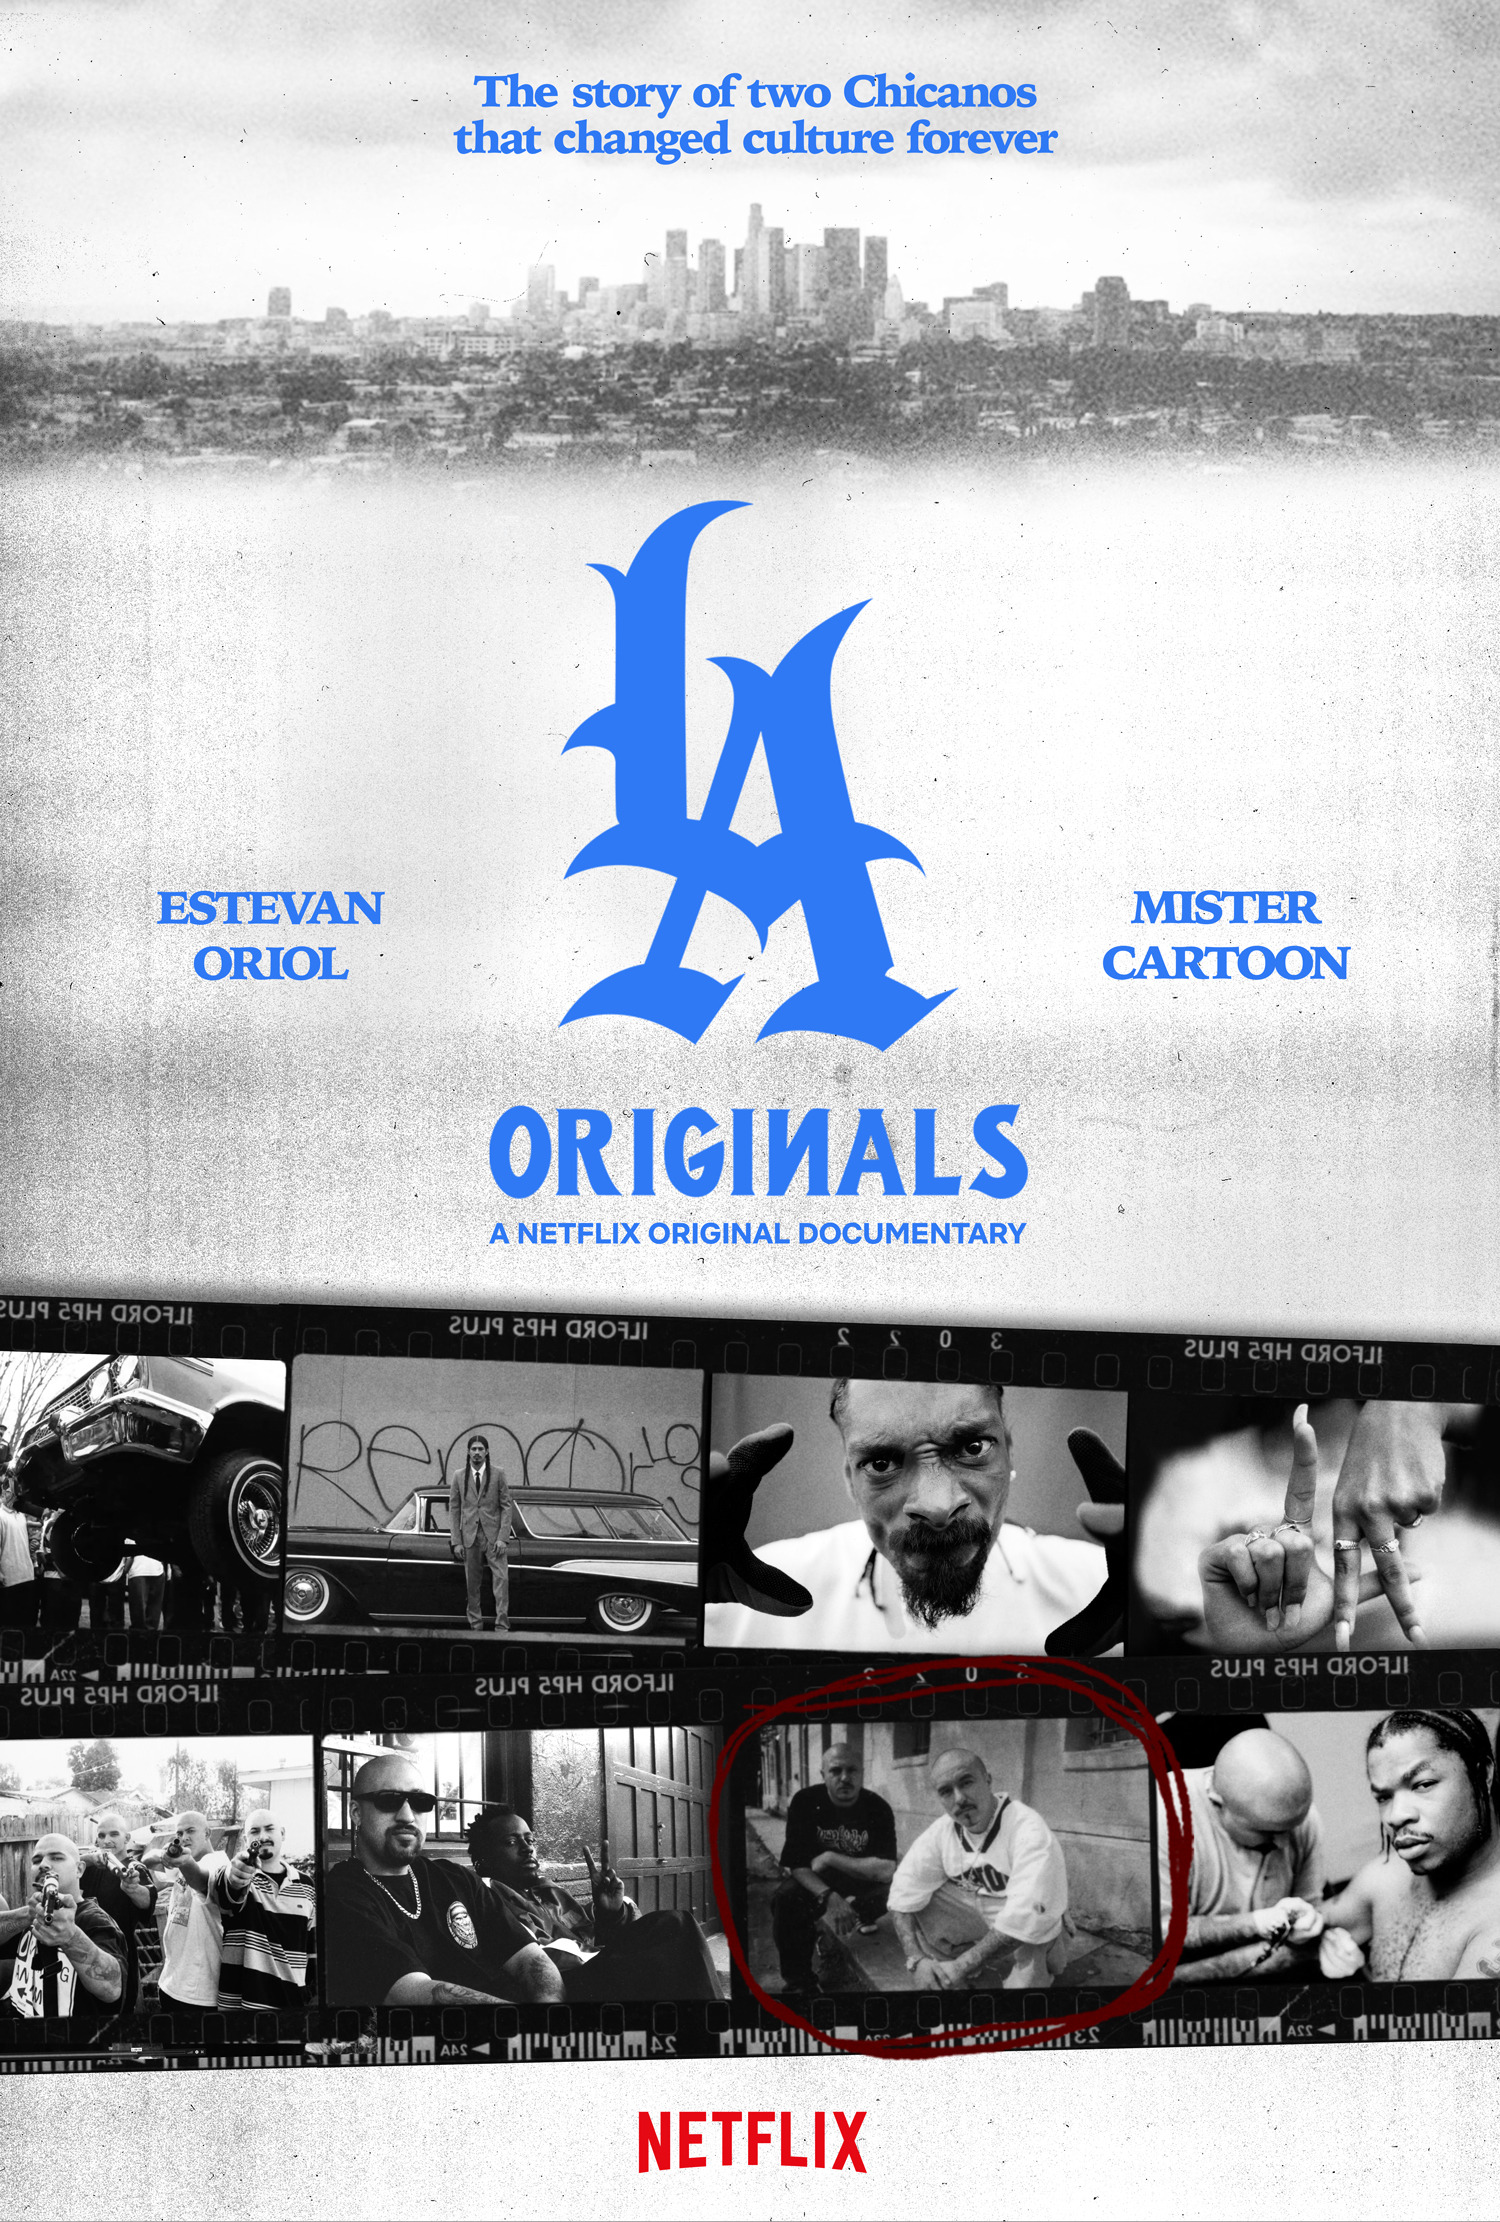 Mega Sized TV Poster Image for L.A. Originals 